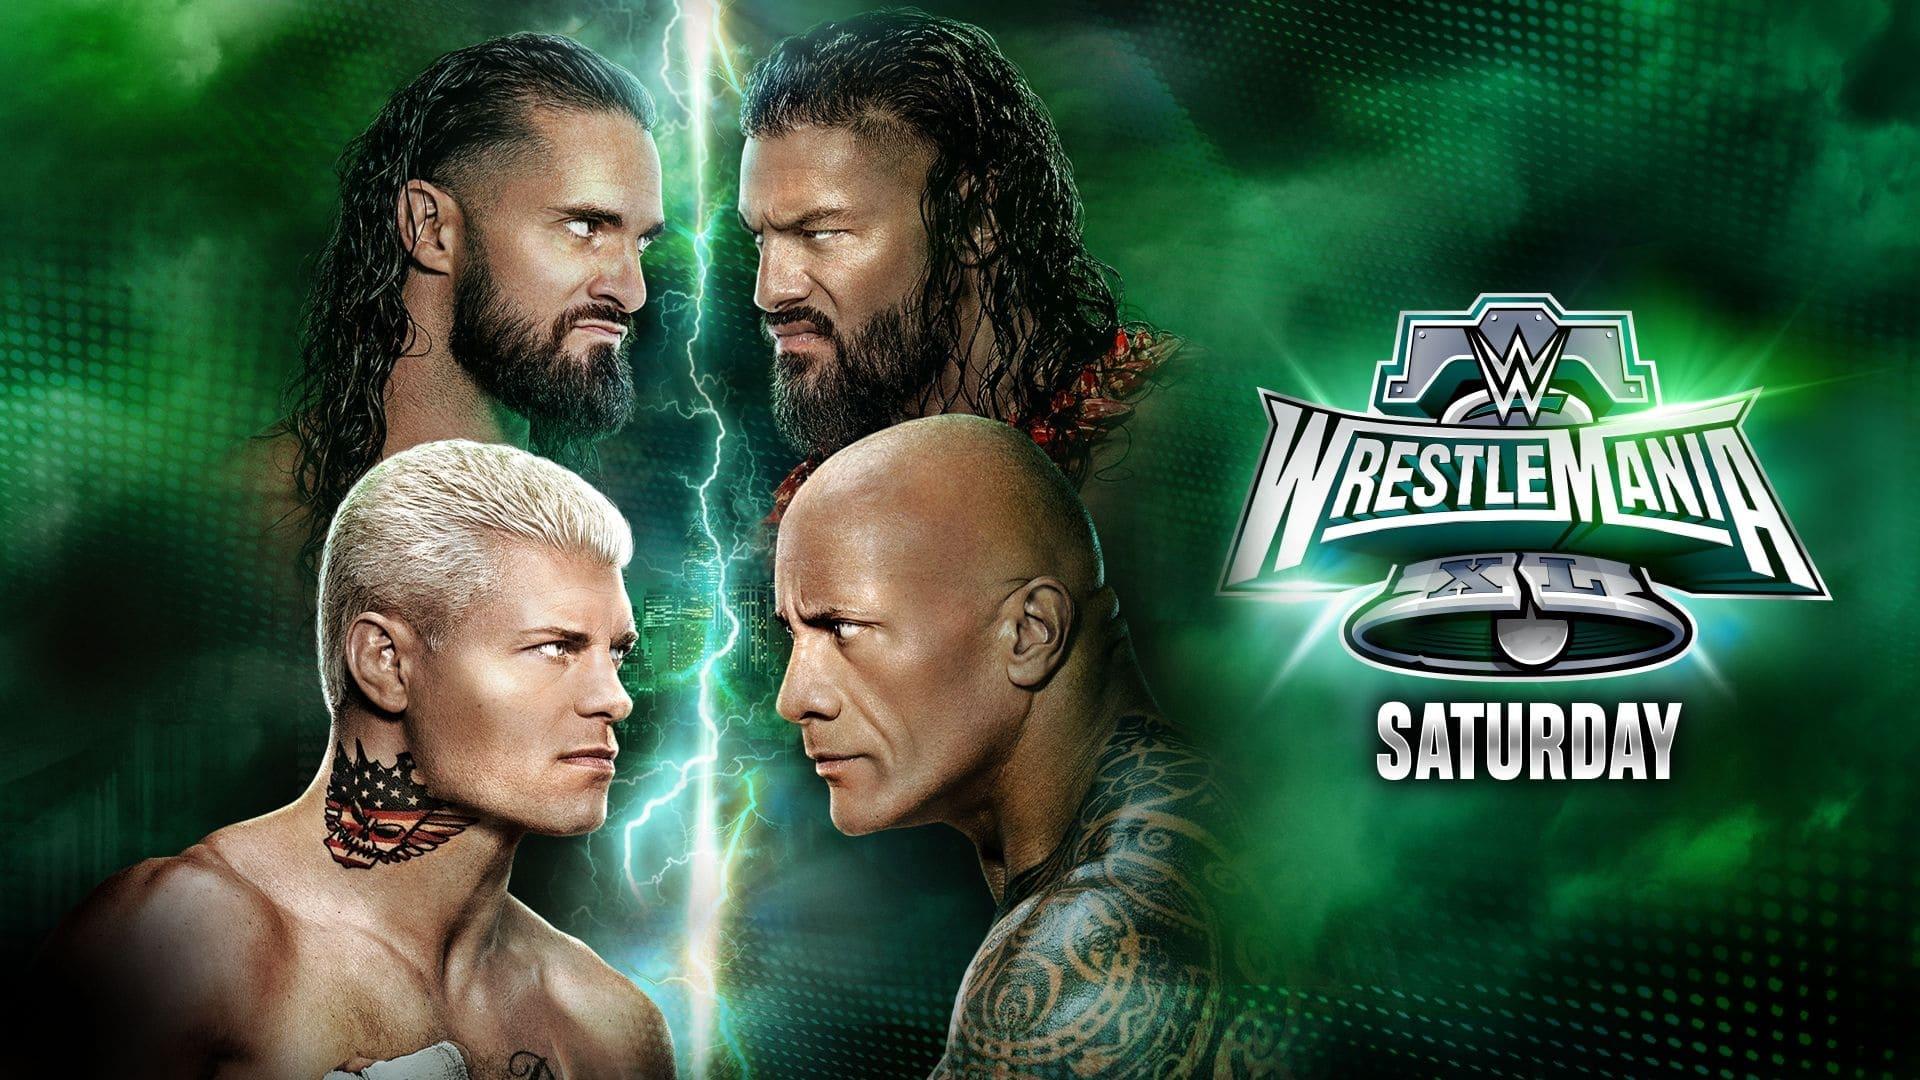 WWE WrestleMania XL Saturday backdrop